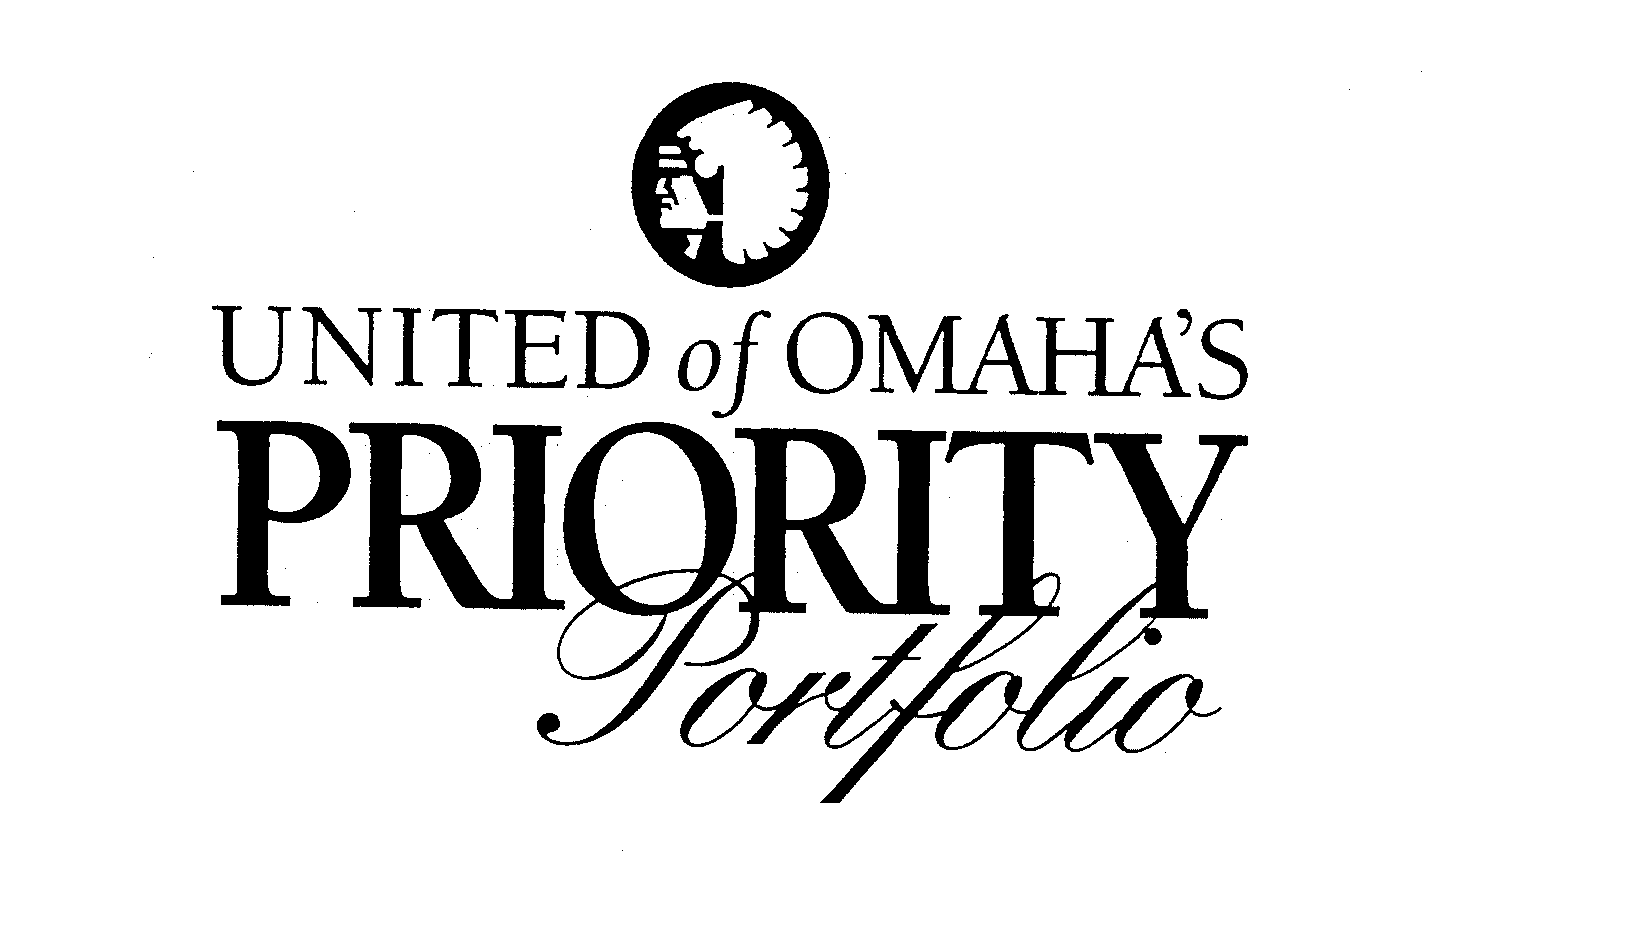  UNITED OF OMAHA'S PRIORITY PORTFOLIO